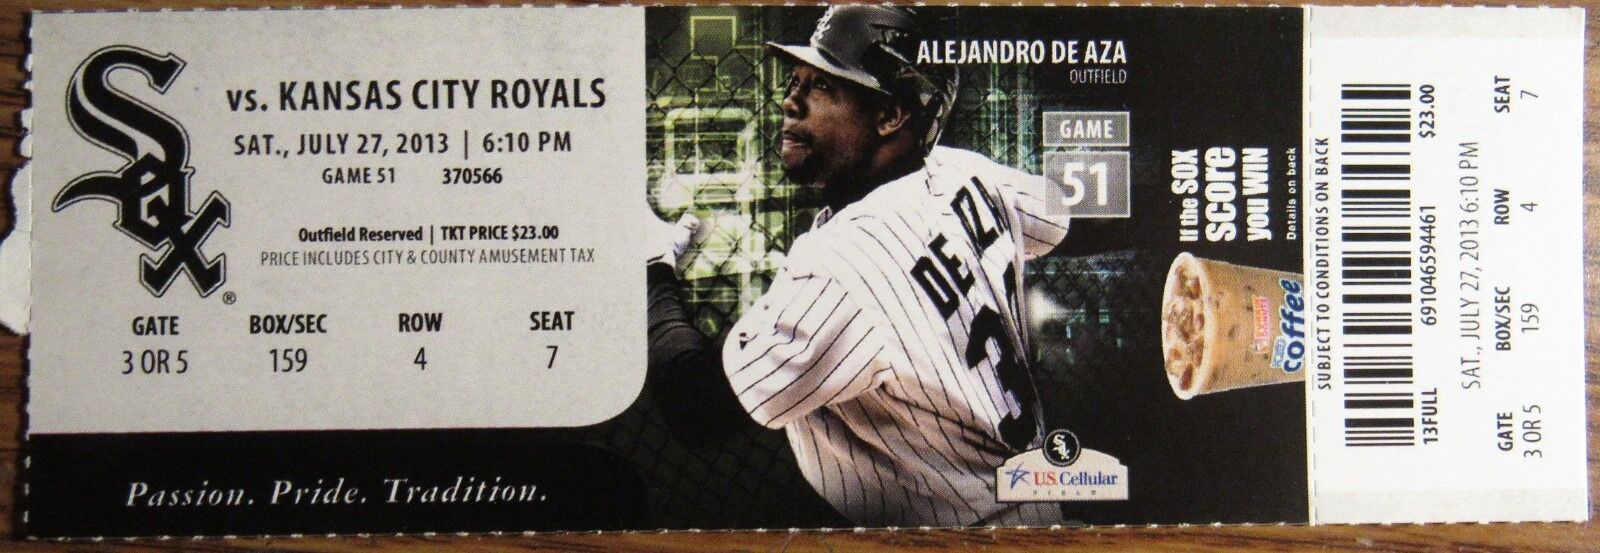 July 27th, 2013 Chicago White Sox vs Royals Ticket Stub - Alejandro De Aza